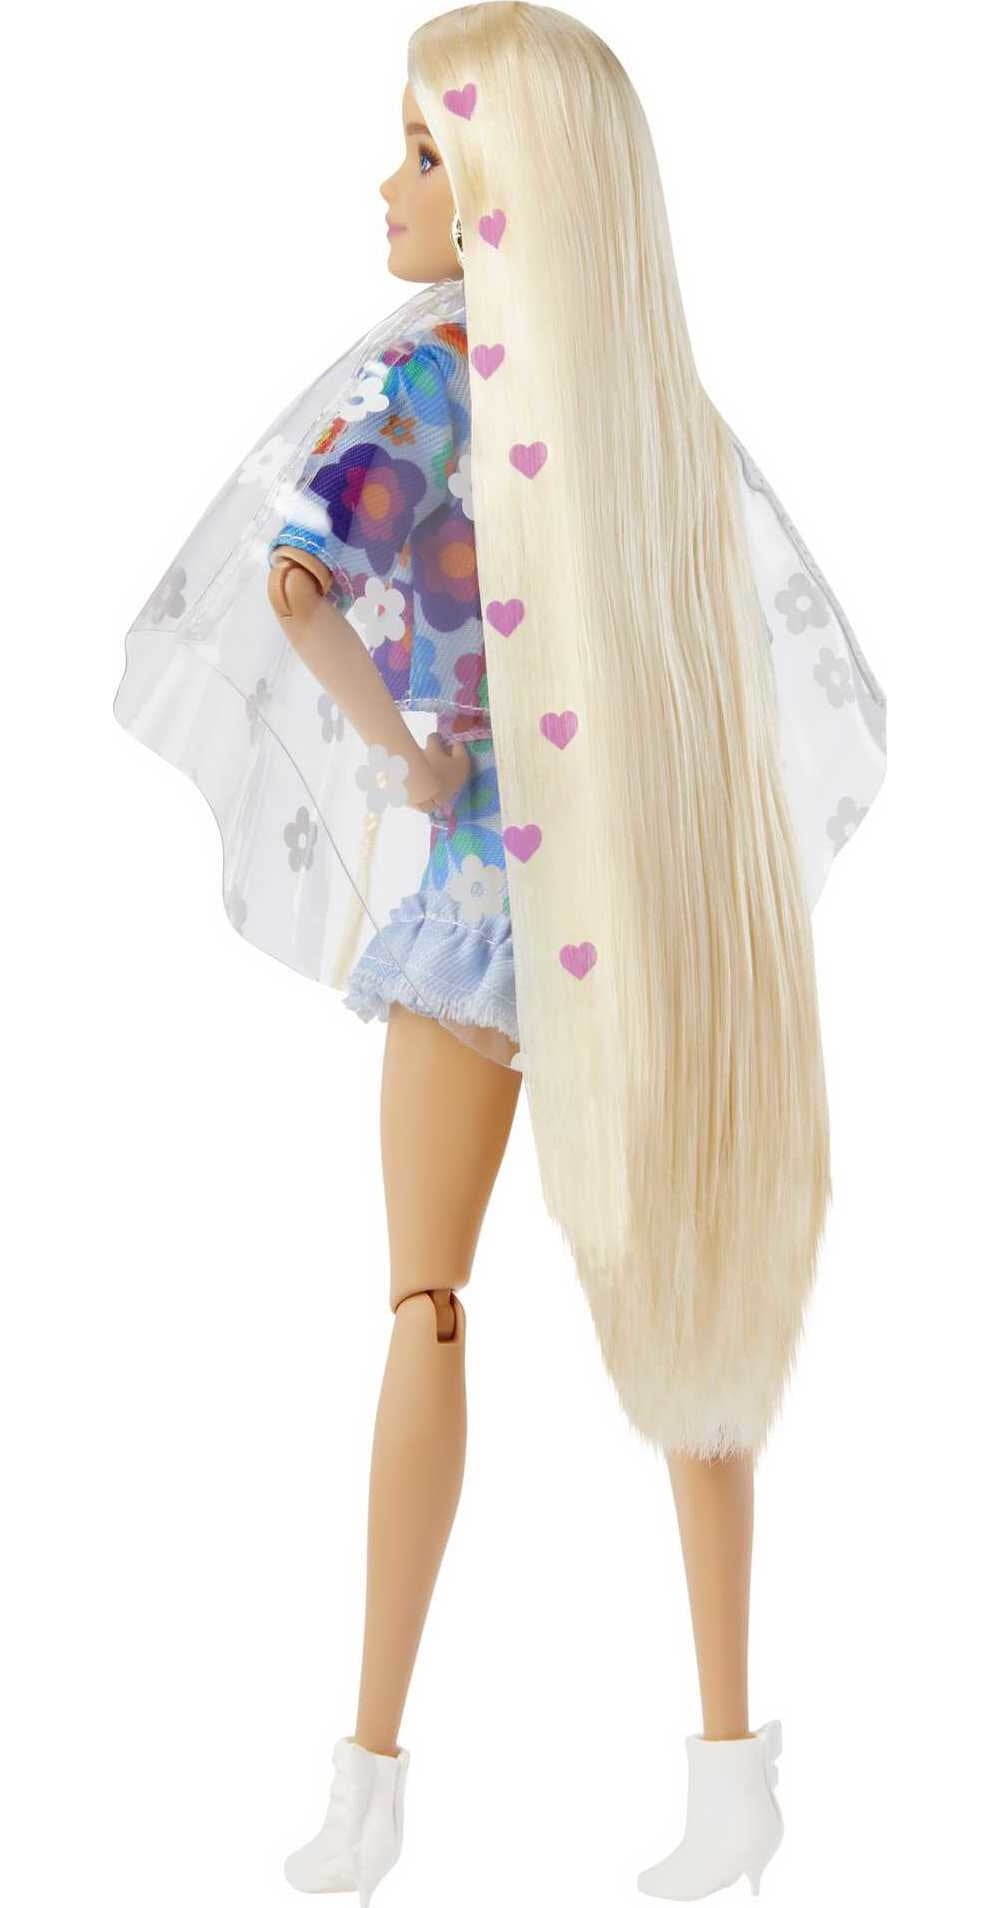 BARBIE Poupée Barbie extra blonde bandana pas cher 